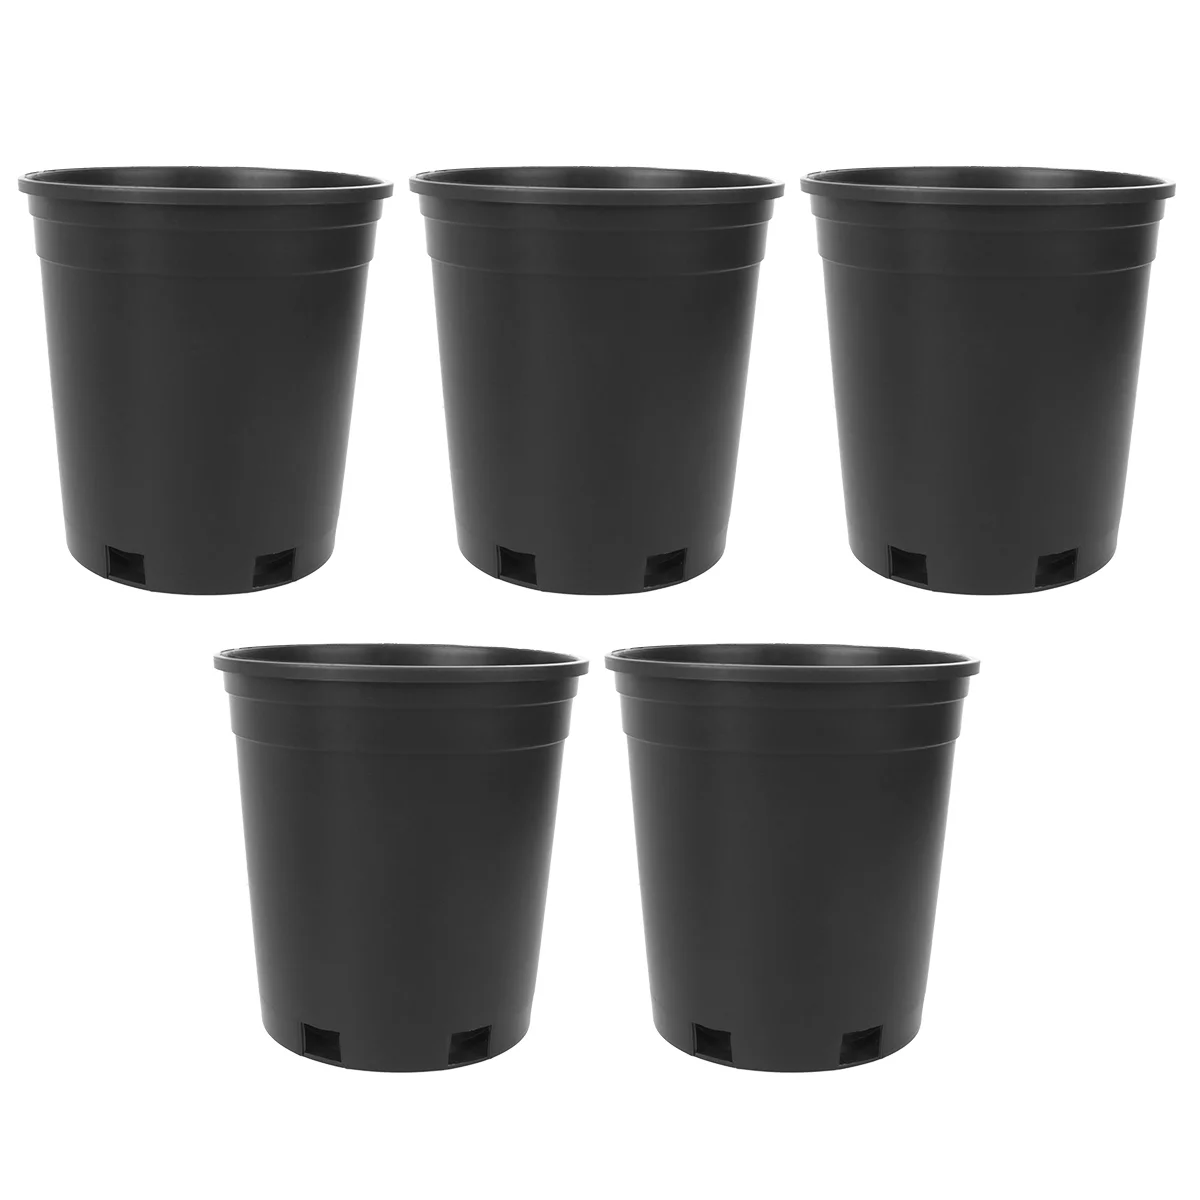 

5pcs Plastic Flower Pot Flower Nursery Pot Round Pot Garden Starter Pots Grow Vase Container ( Black 1 Gallon Capacity )